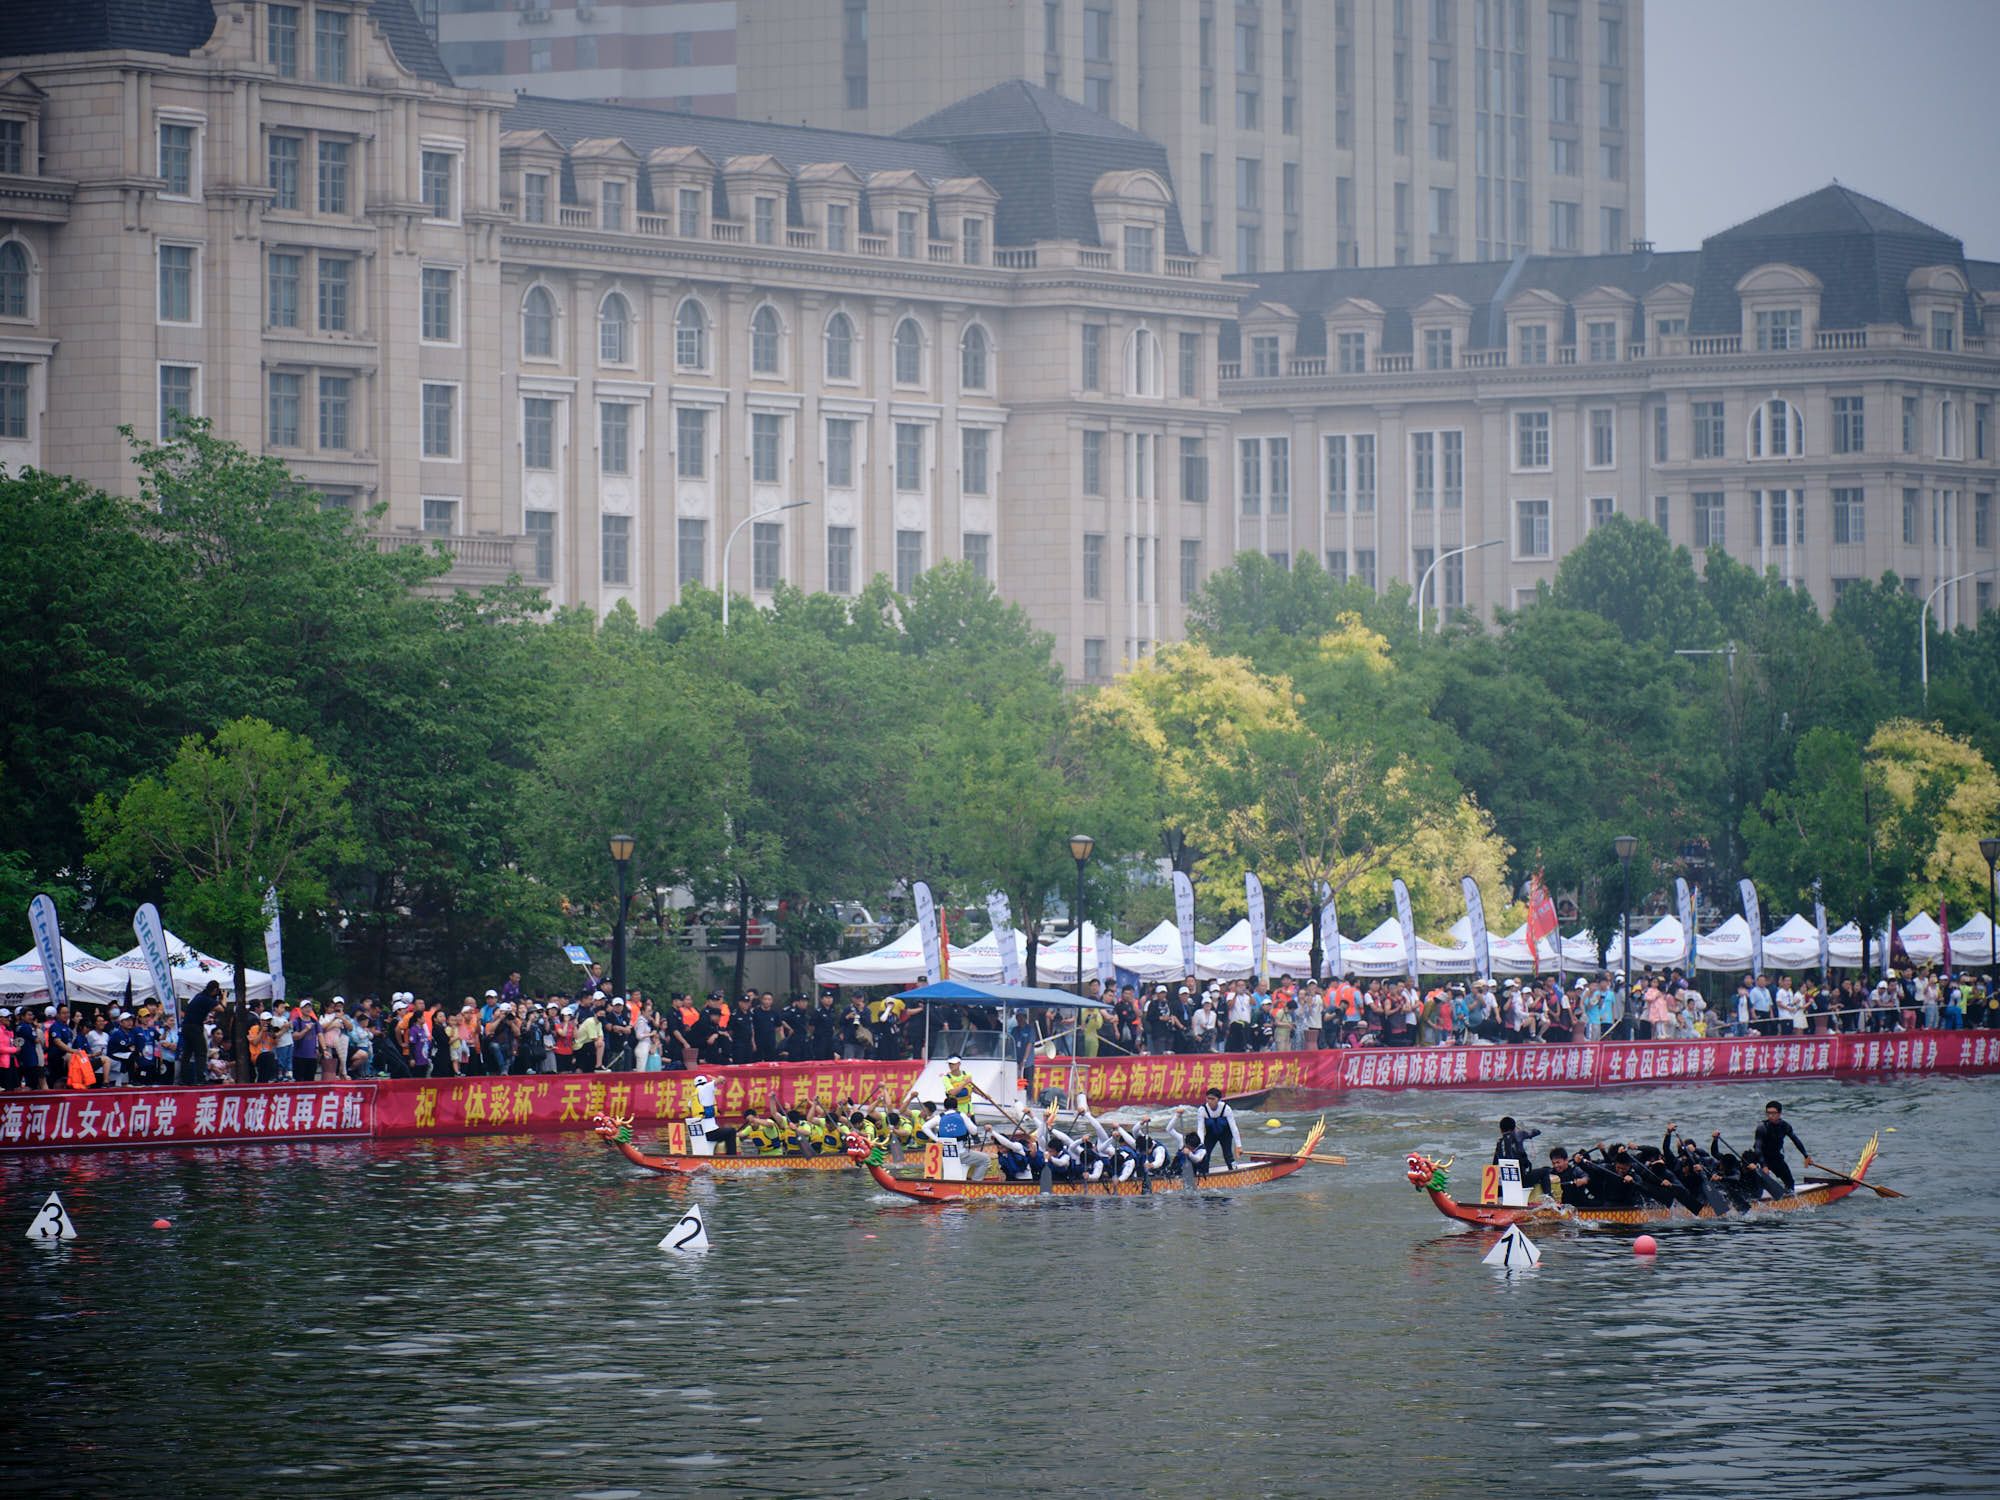 Dragon Boat race in Tianjin, China